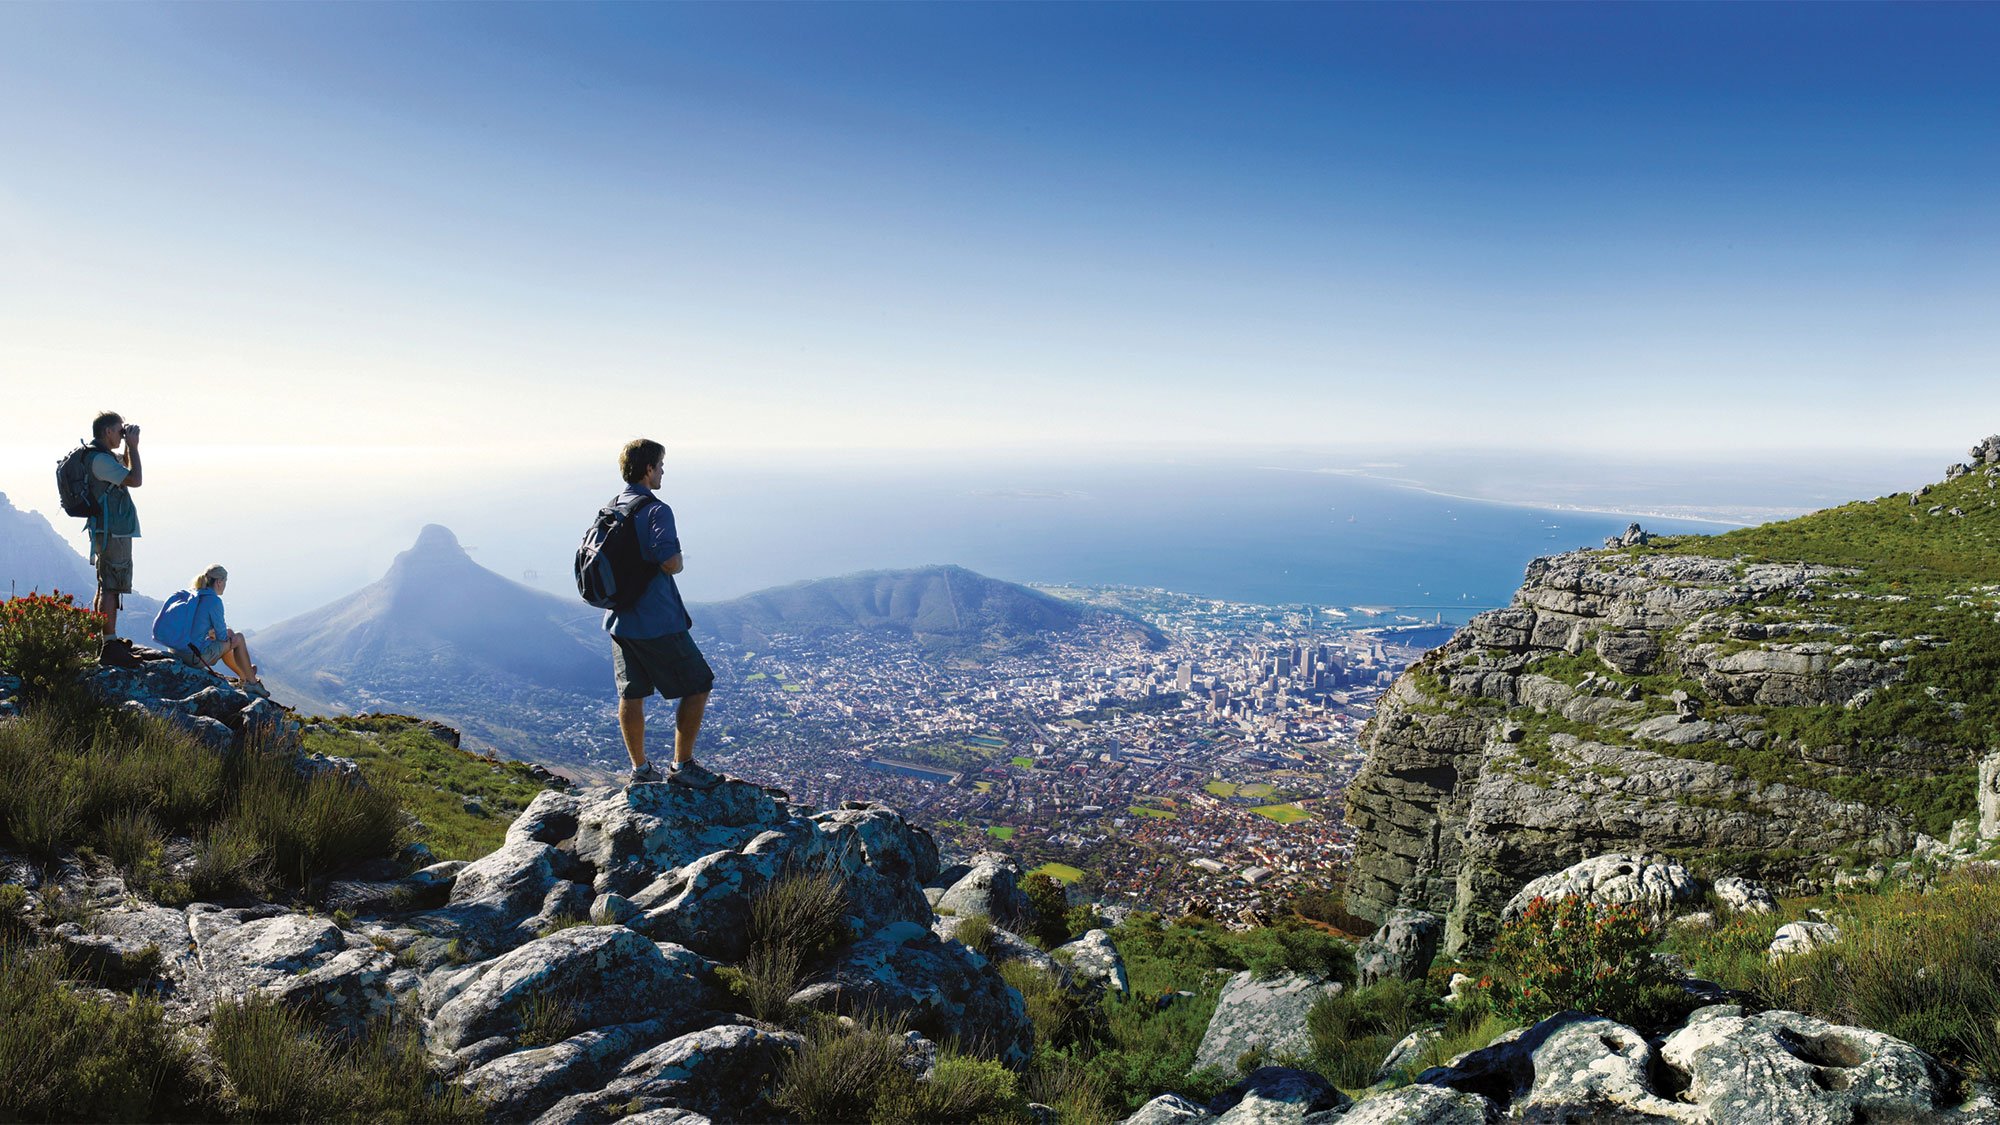 Top adventure. . Кейптаун, ЮАР туризм. Кейптаун Сити туристы. Столовая гора Кейптаун смотровая. Столовая гора Кейптаун фуникулер.